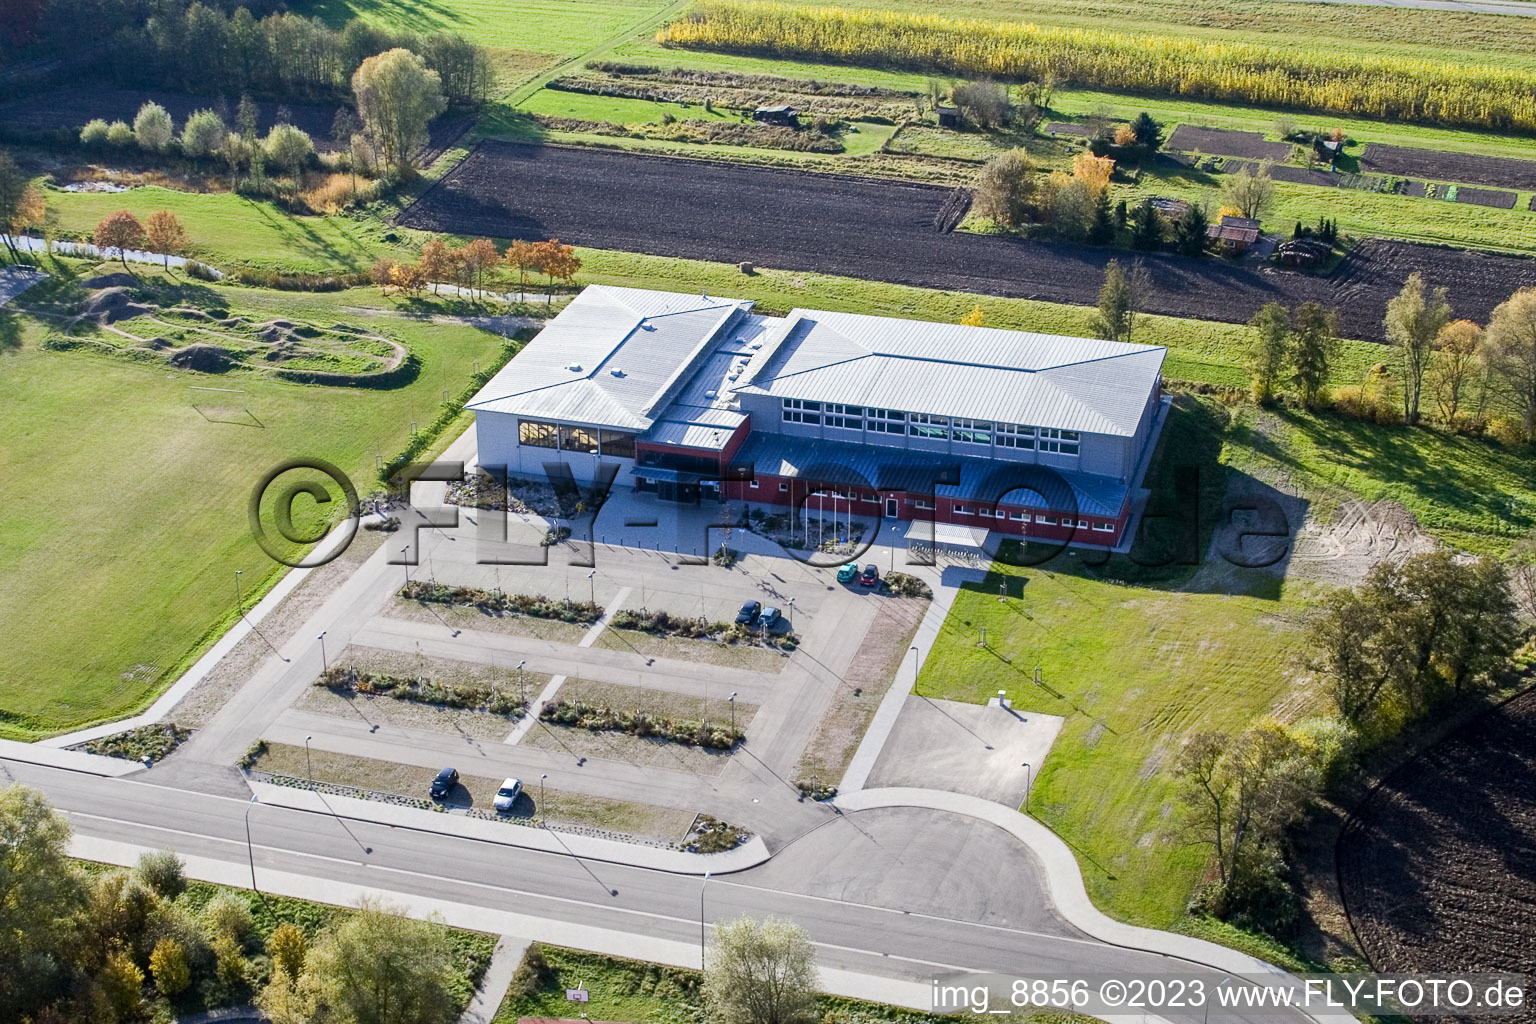 Aerial view of Bienwaldhalle in Kandel in the state Rhineland-Palatinate, Germany